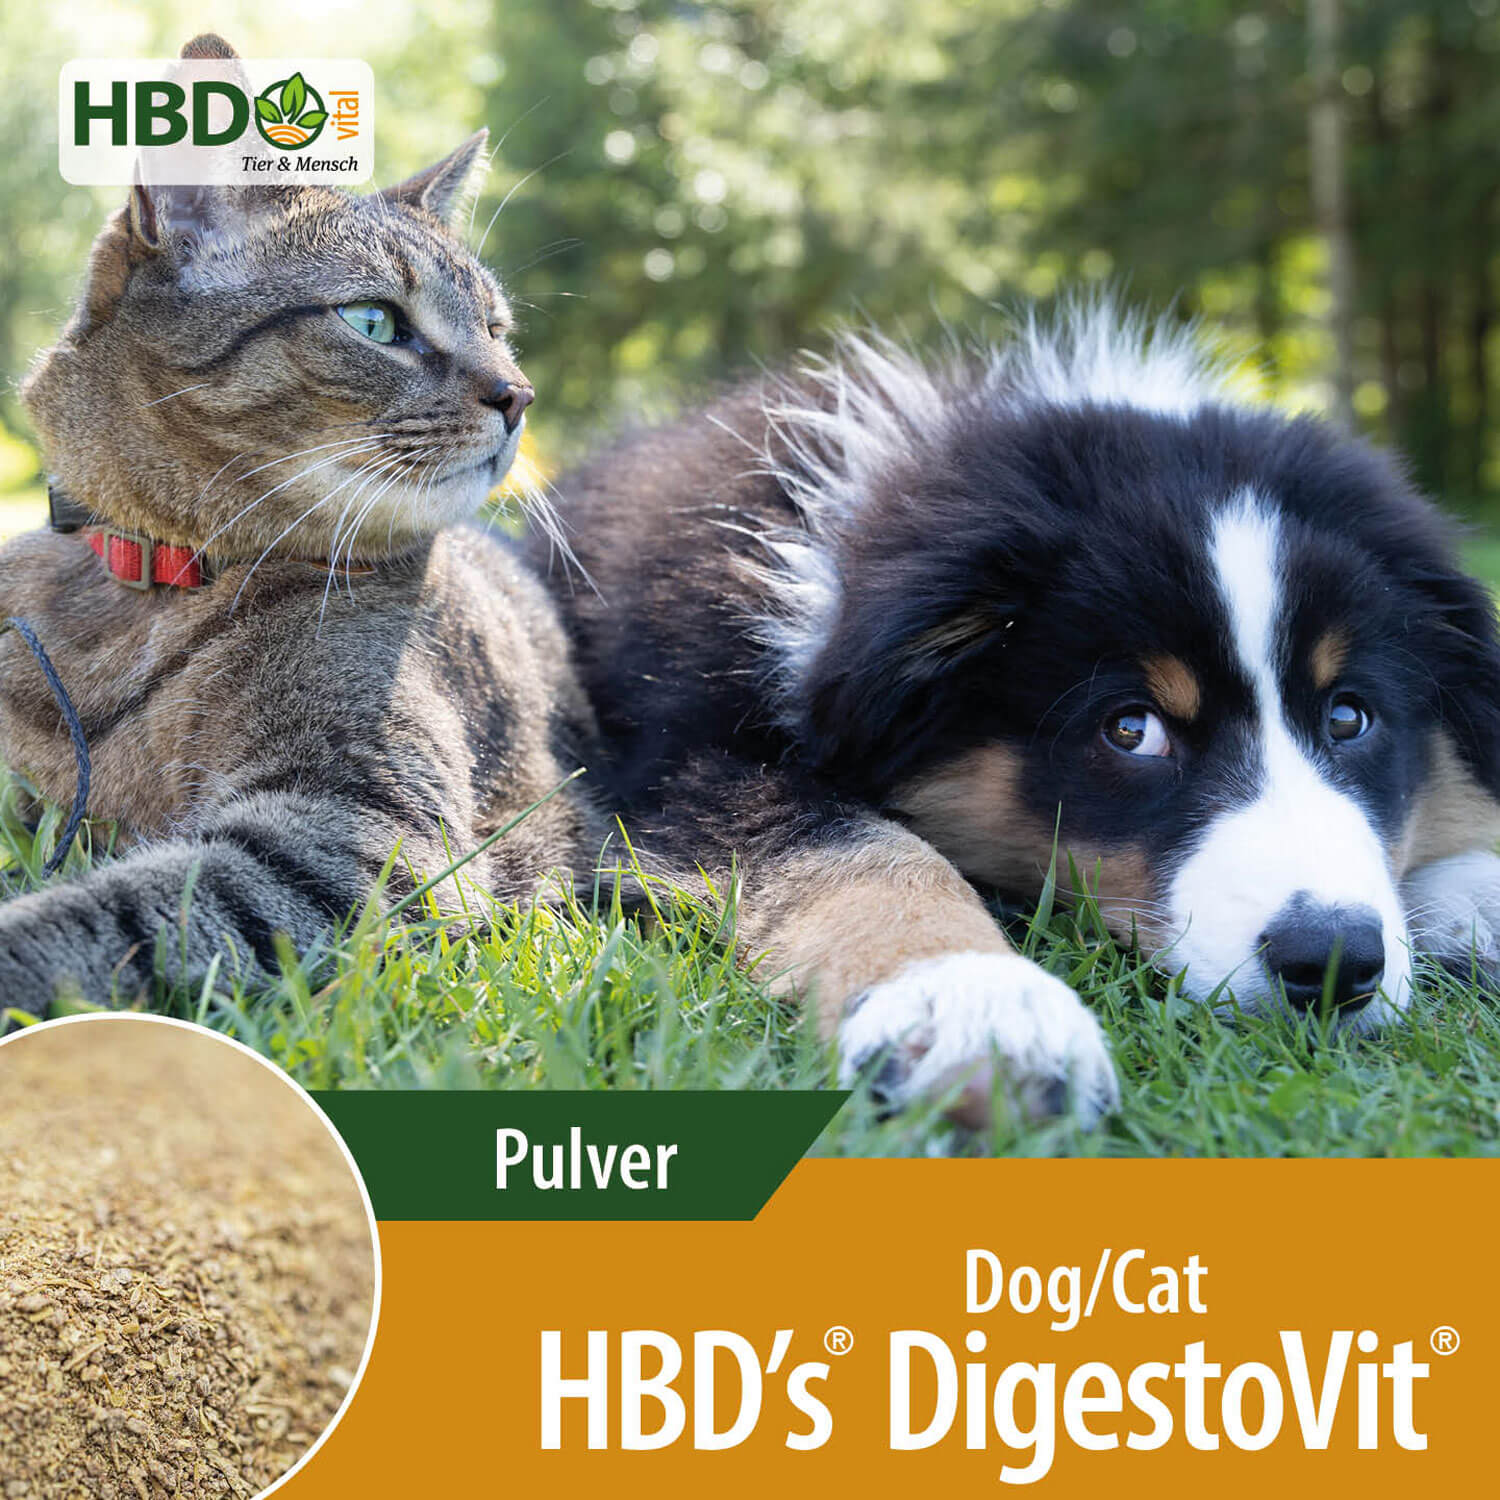 HBD-Agrar - HBD´s® DigestoVit Dog - innovative Darmkur für den Hund